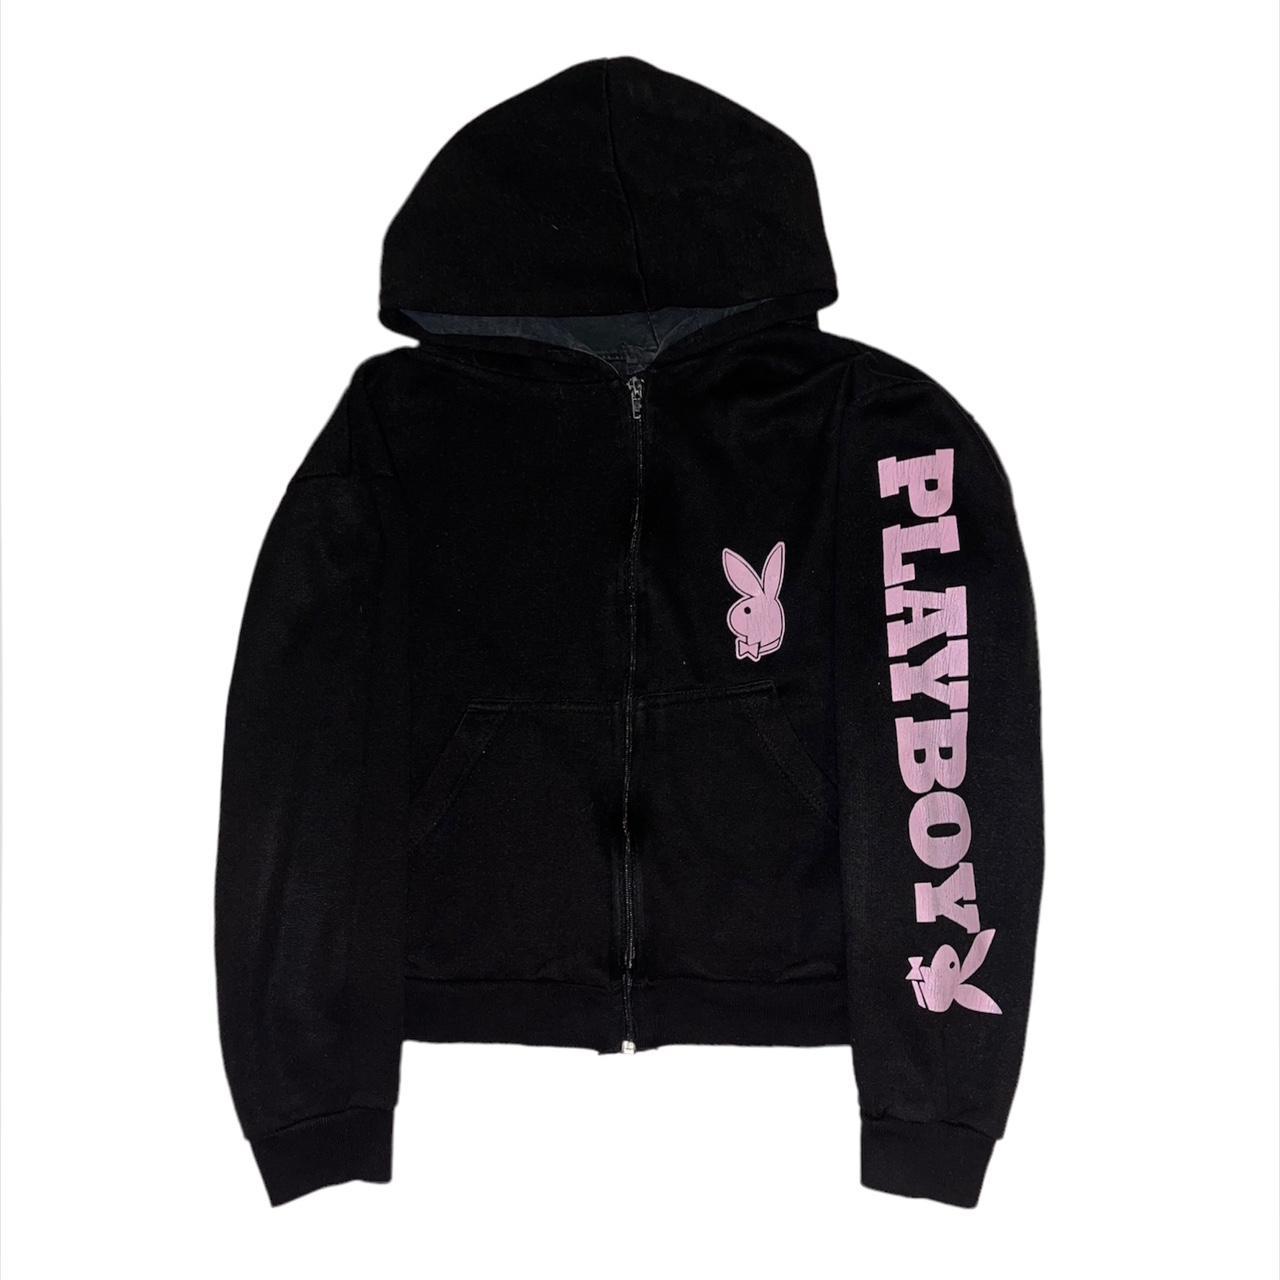 🦋🌸Playboy zip up crop hoodie. Black with pink bunny... - Depop